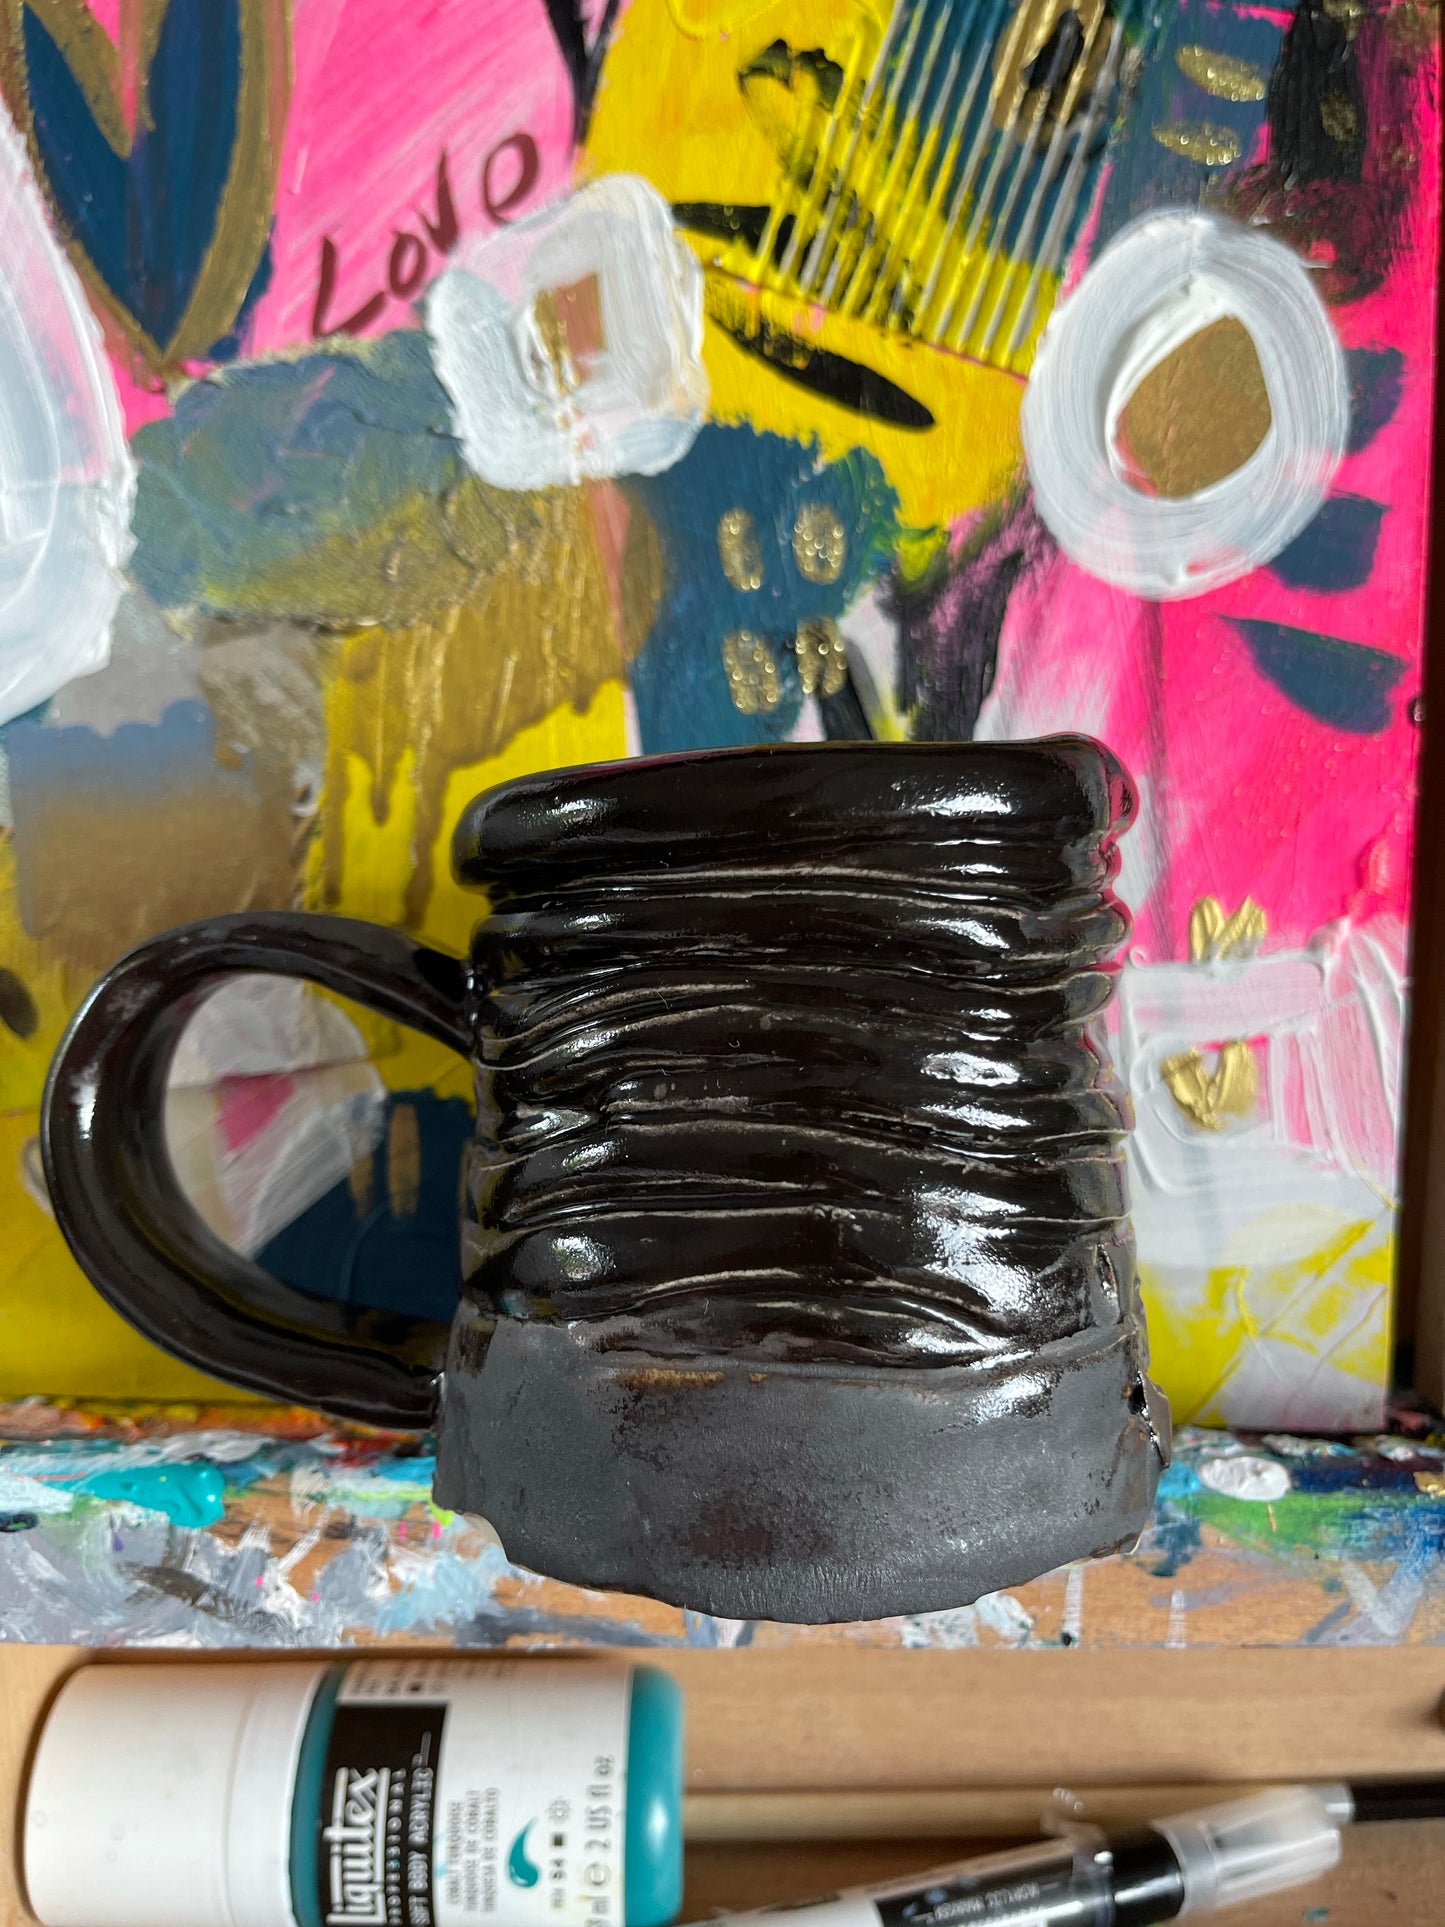 Coil mug